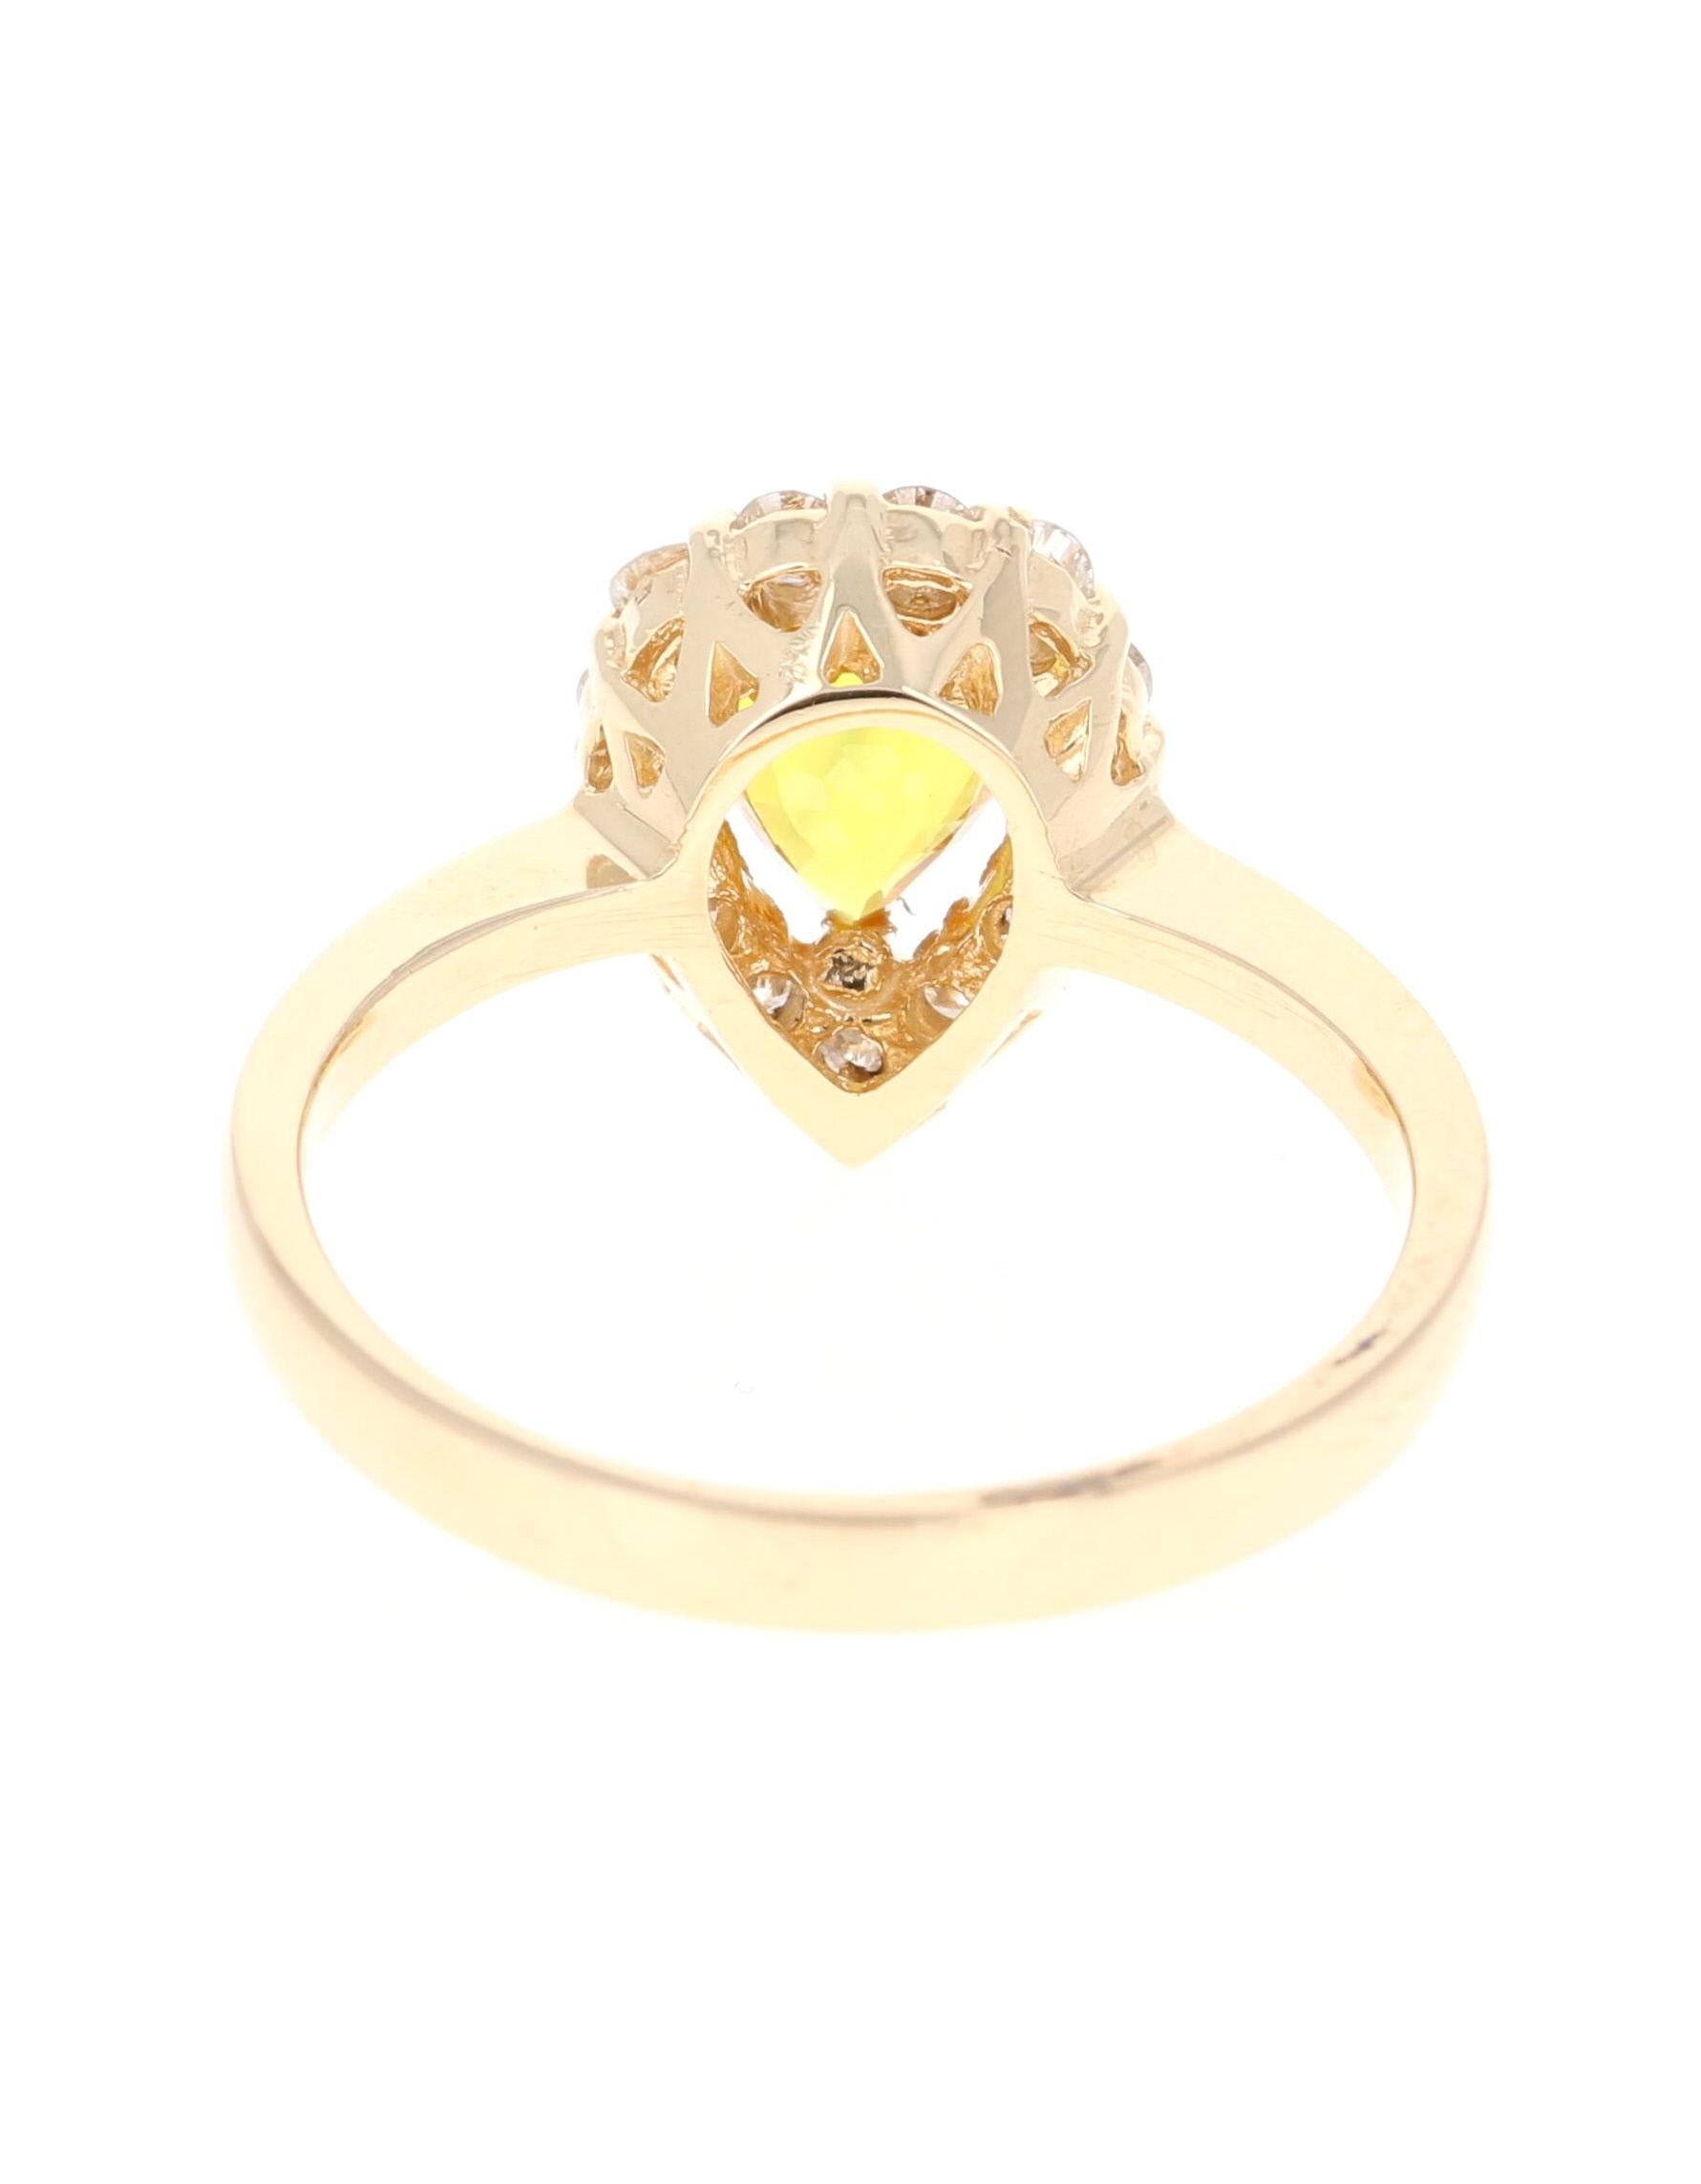 Contemporary 1.54 Carat Yellow Sapphire and Diamond 14 Karat Yellow Gold Ring